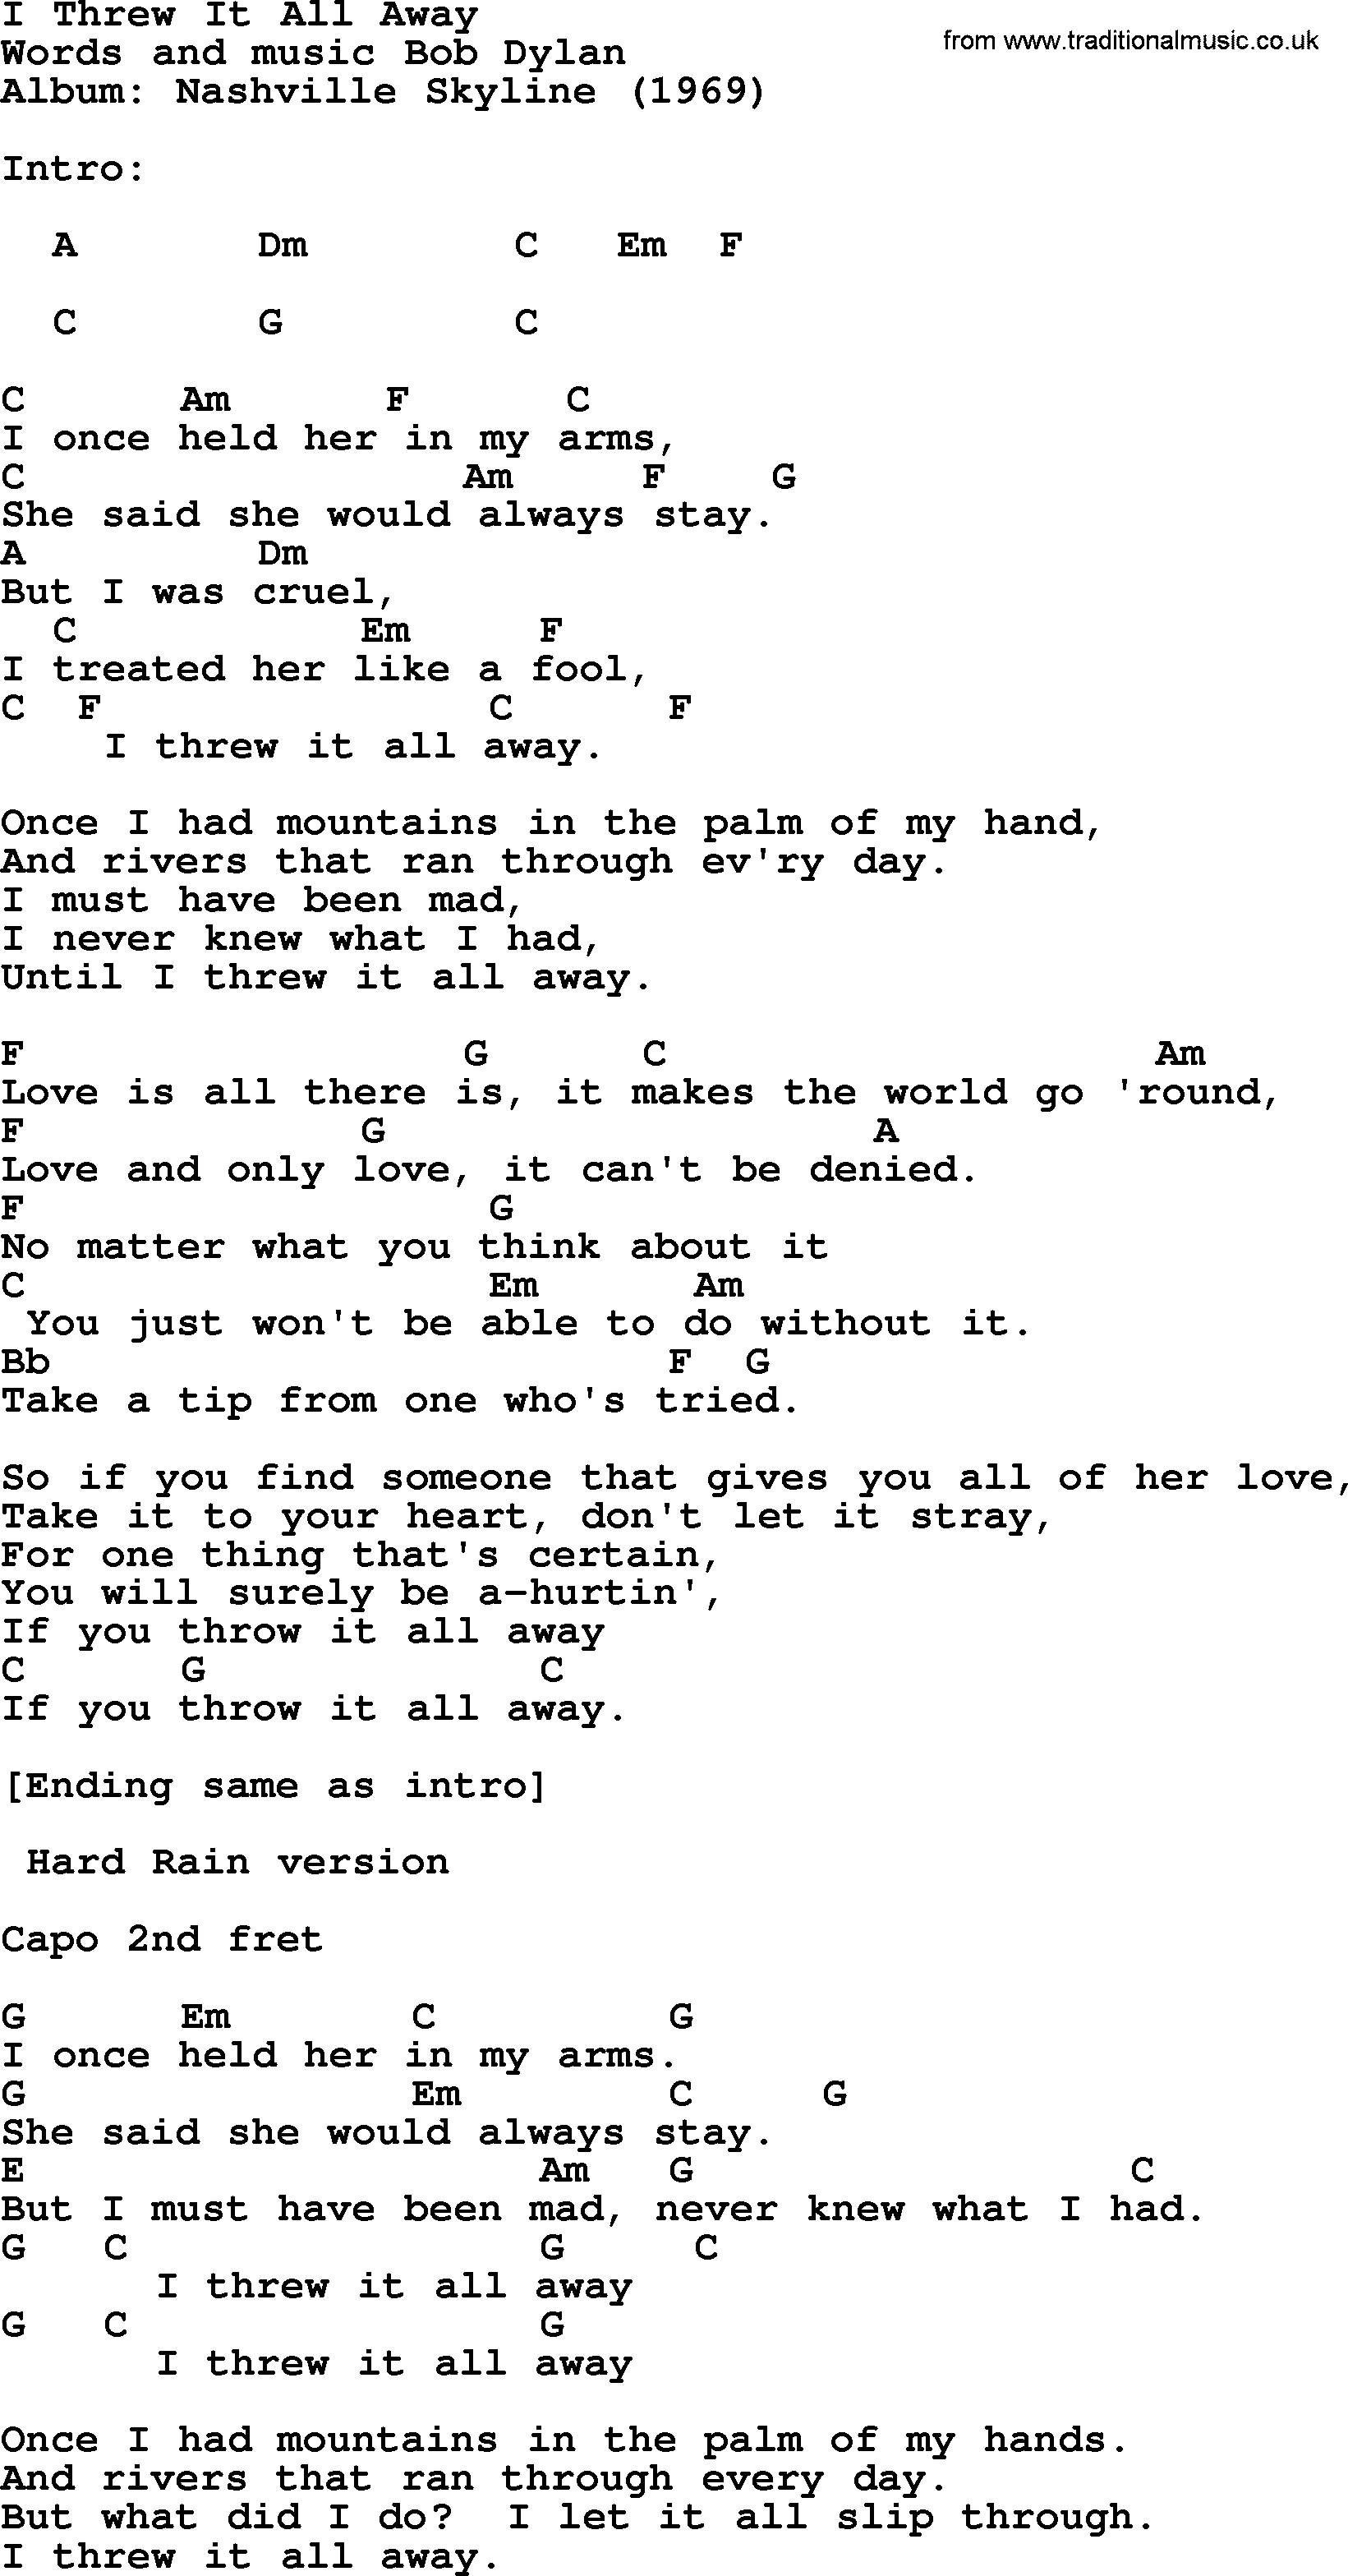 Bob Dylan song, lyrics with chords - I Threw It All Away